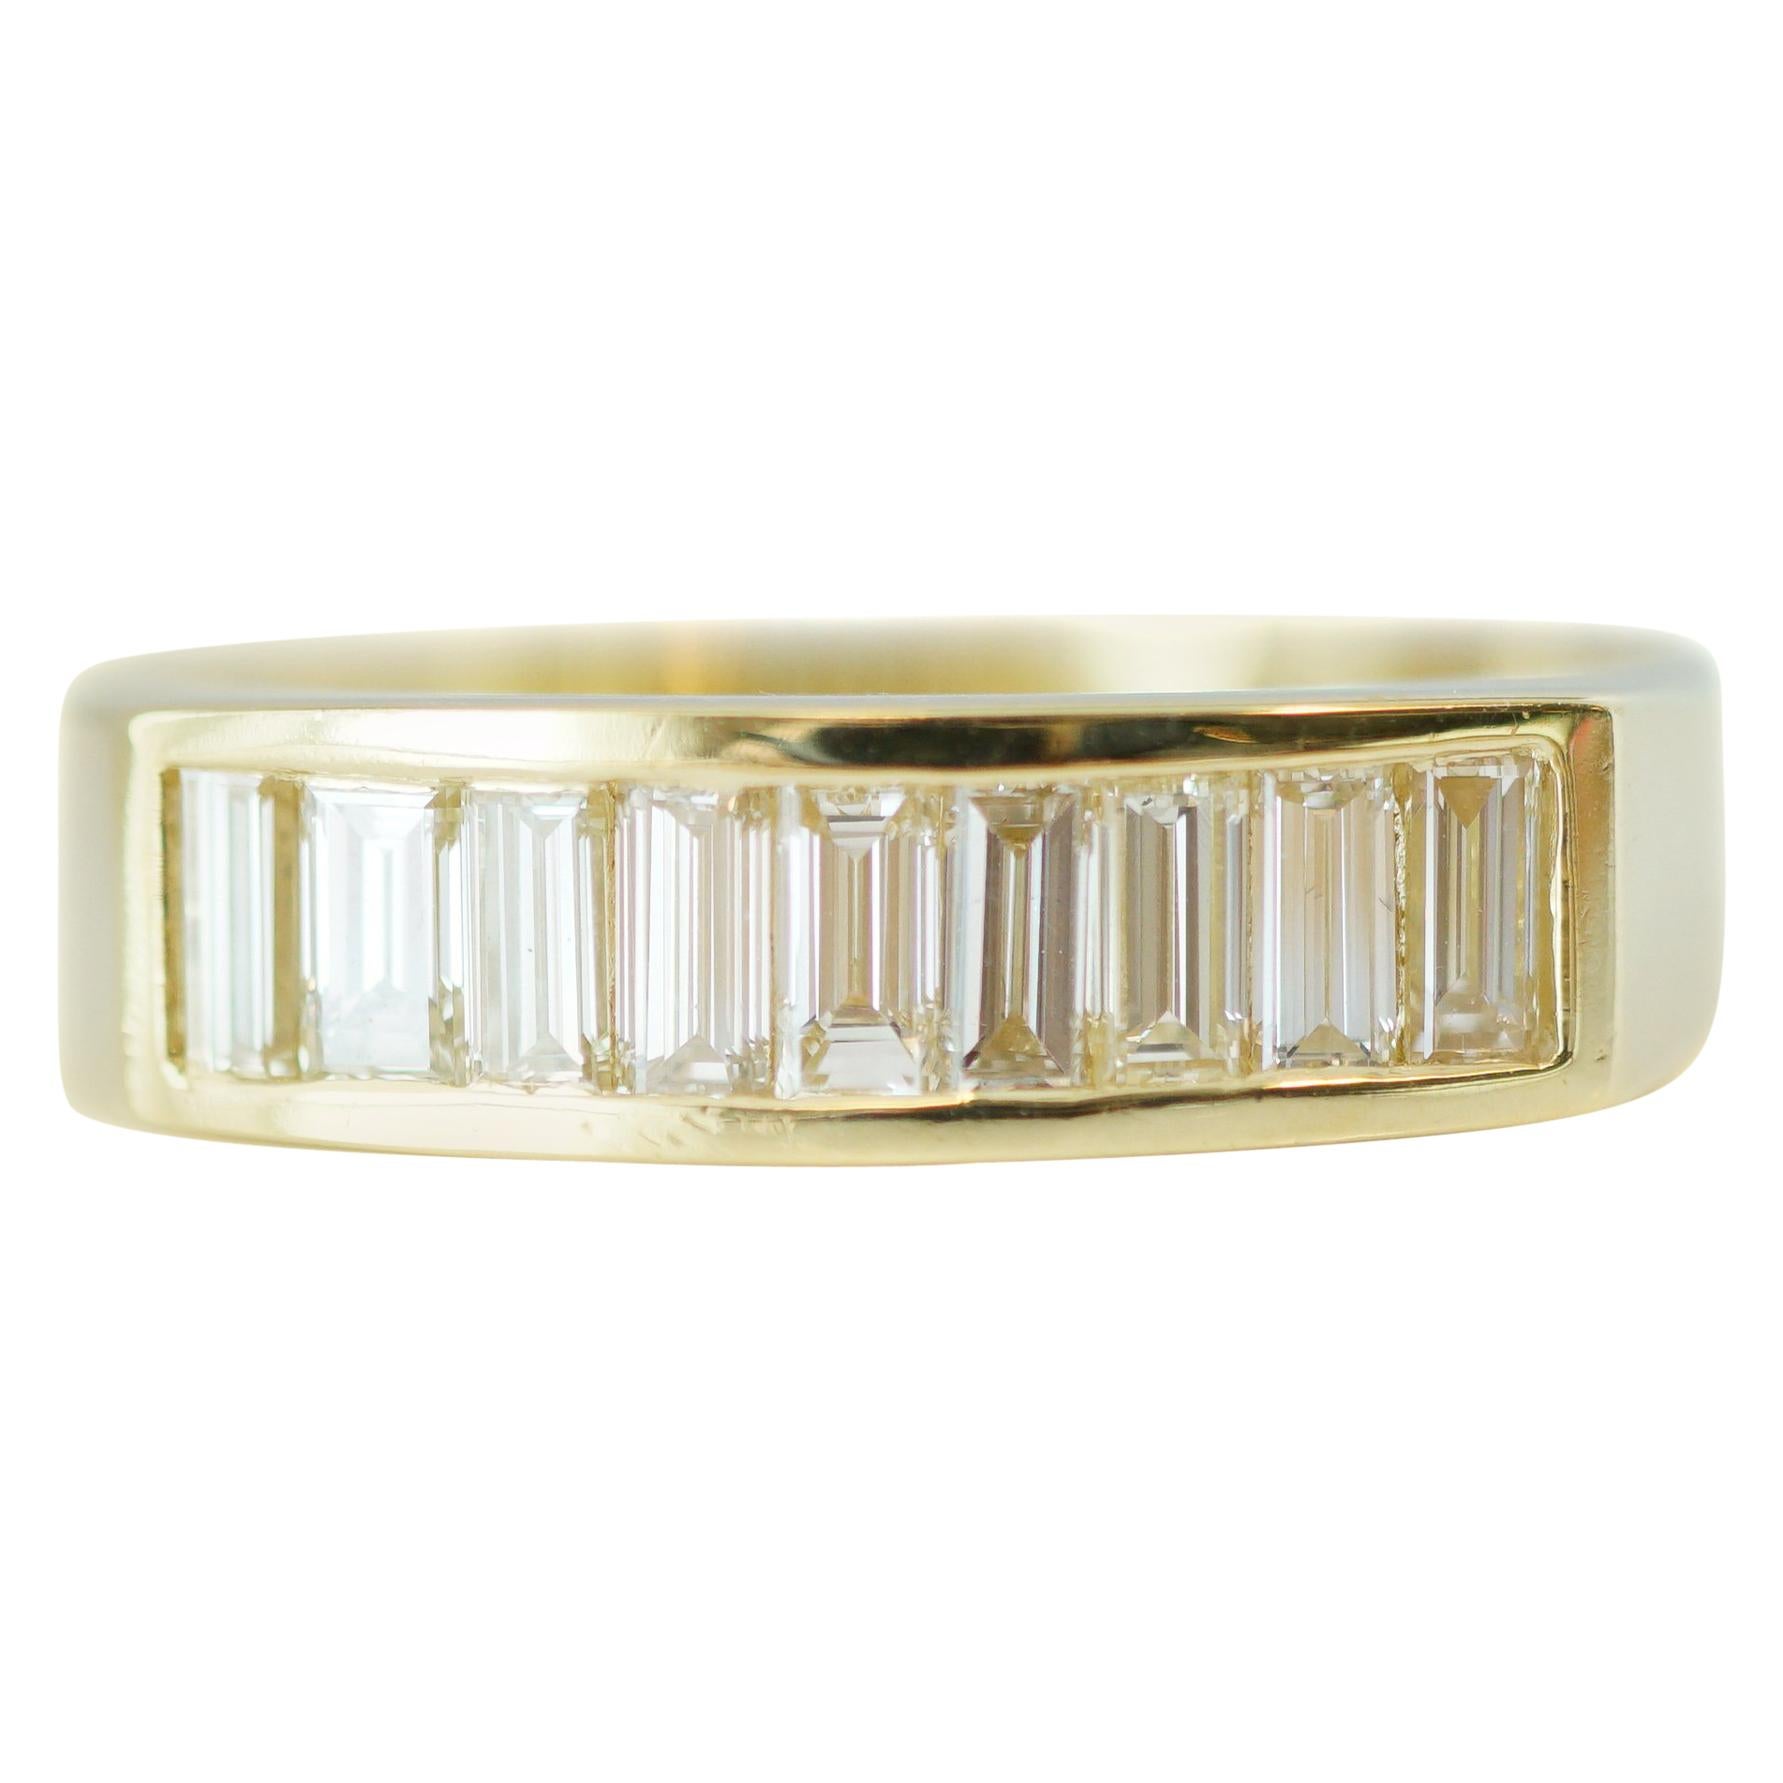 1 Carat Total Emerald Cut Diamond and 18 Karat Yellow Gold Band Ring